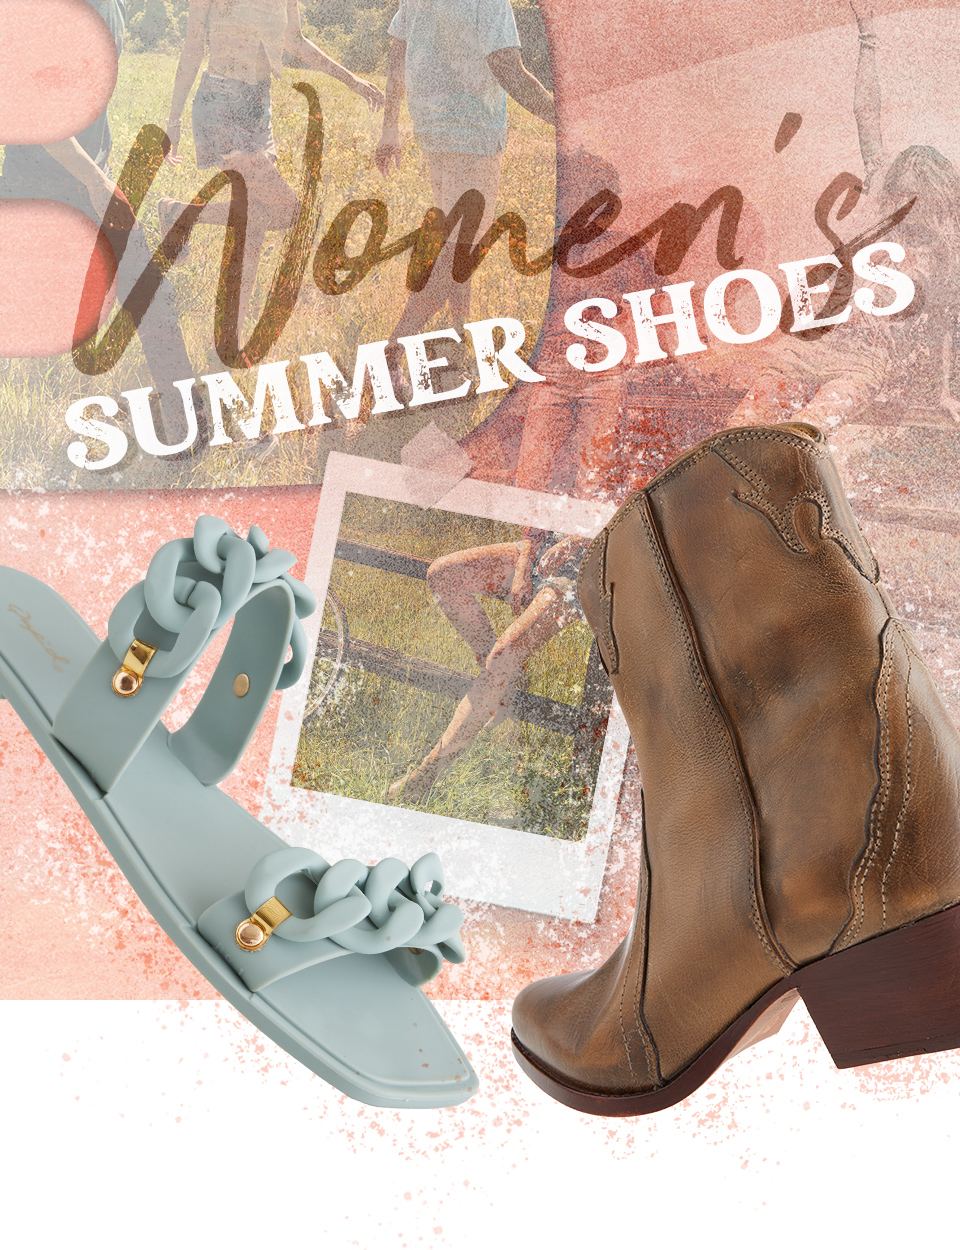 Women's Summer Shoes - A brown cowboy boot and a light blue sandal